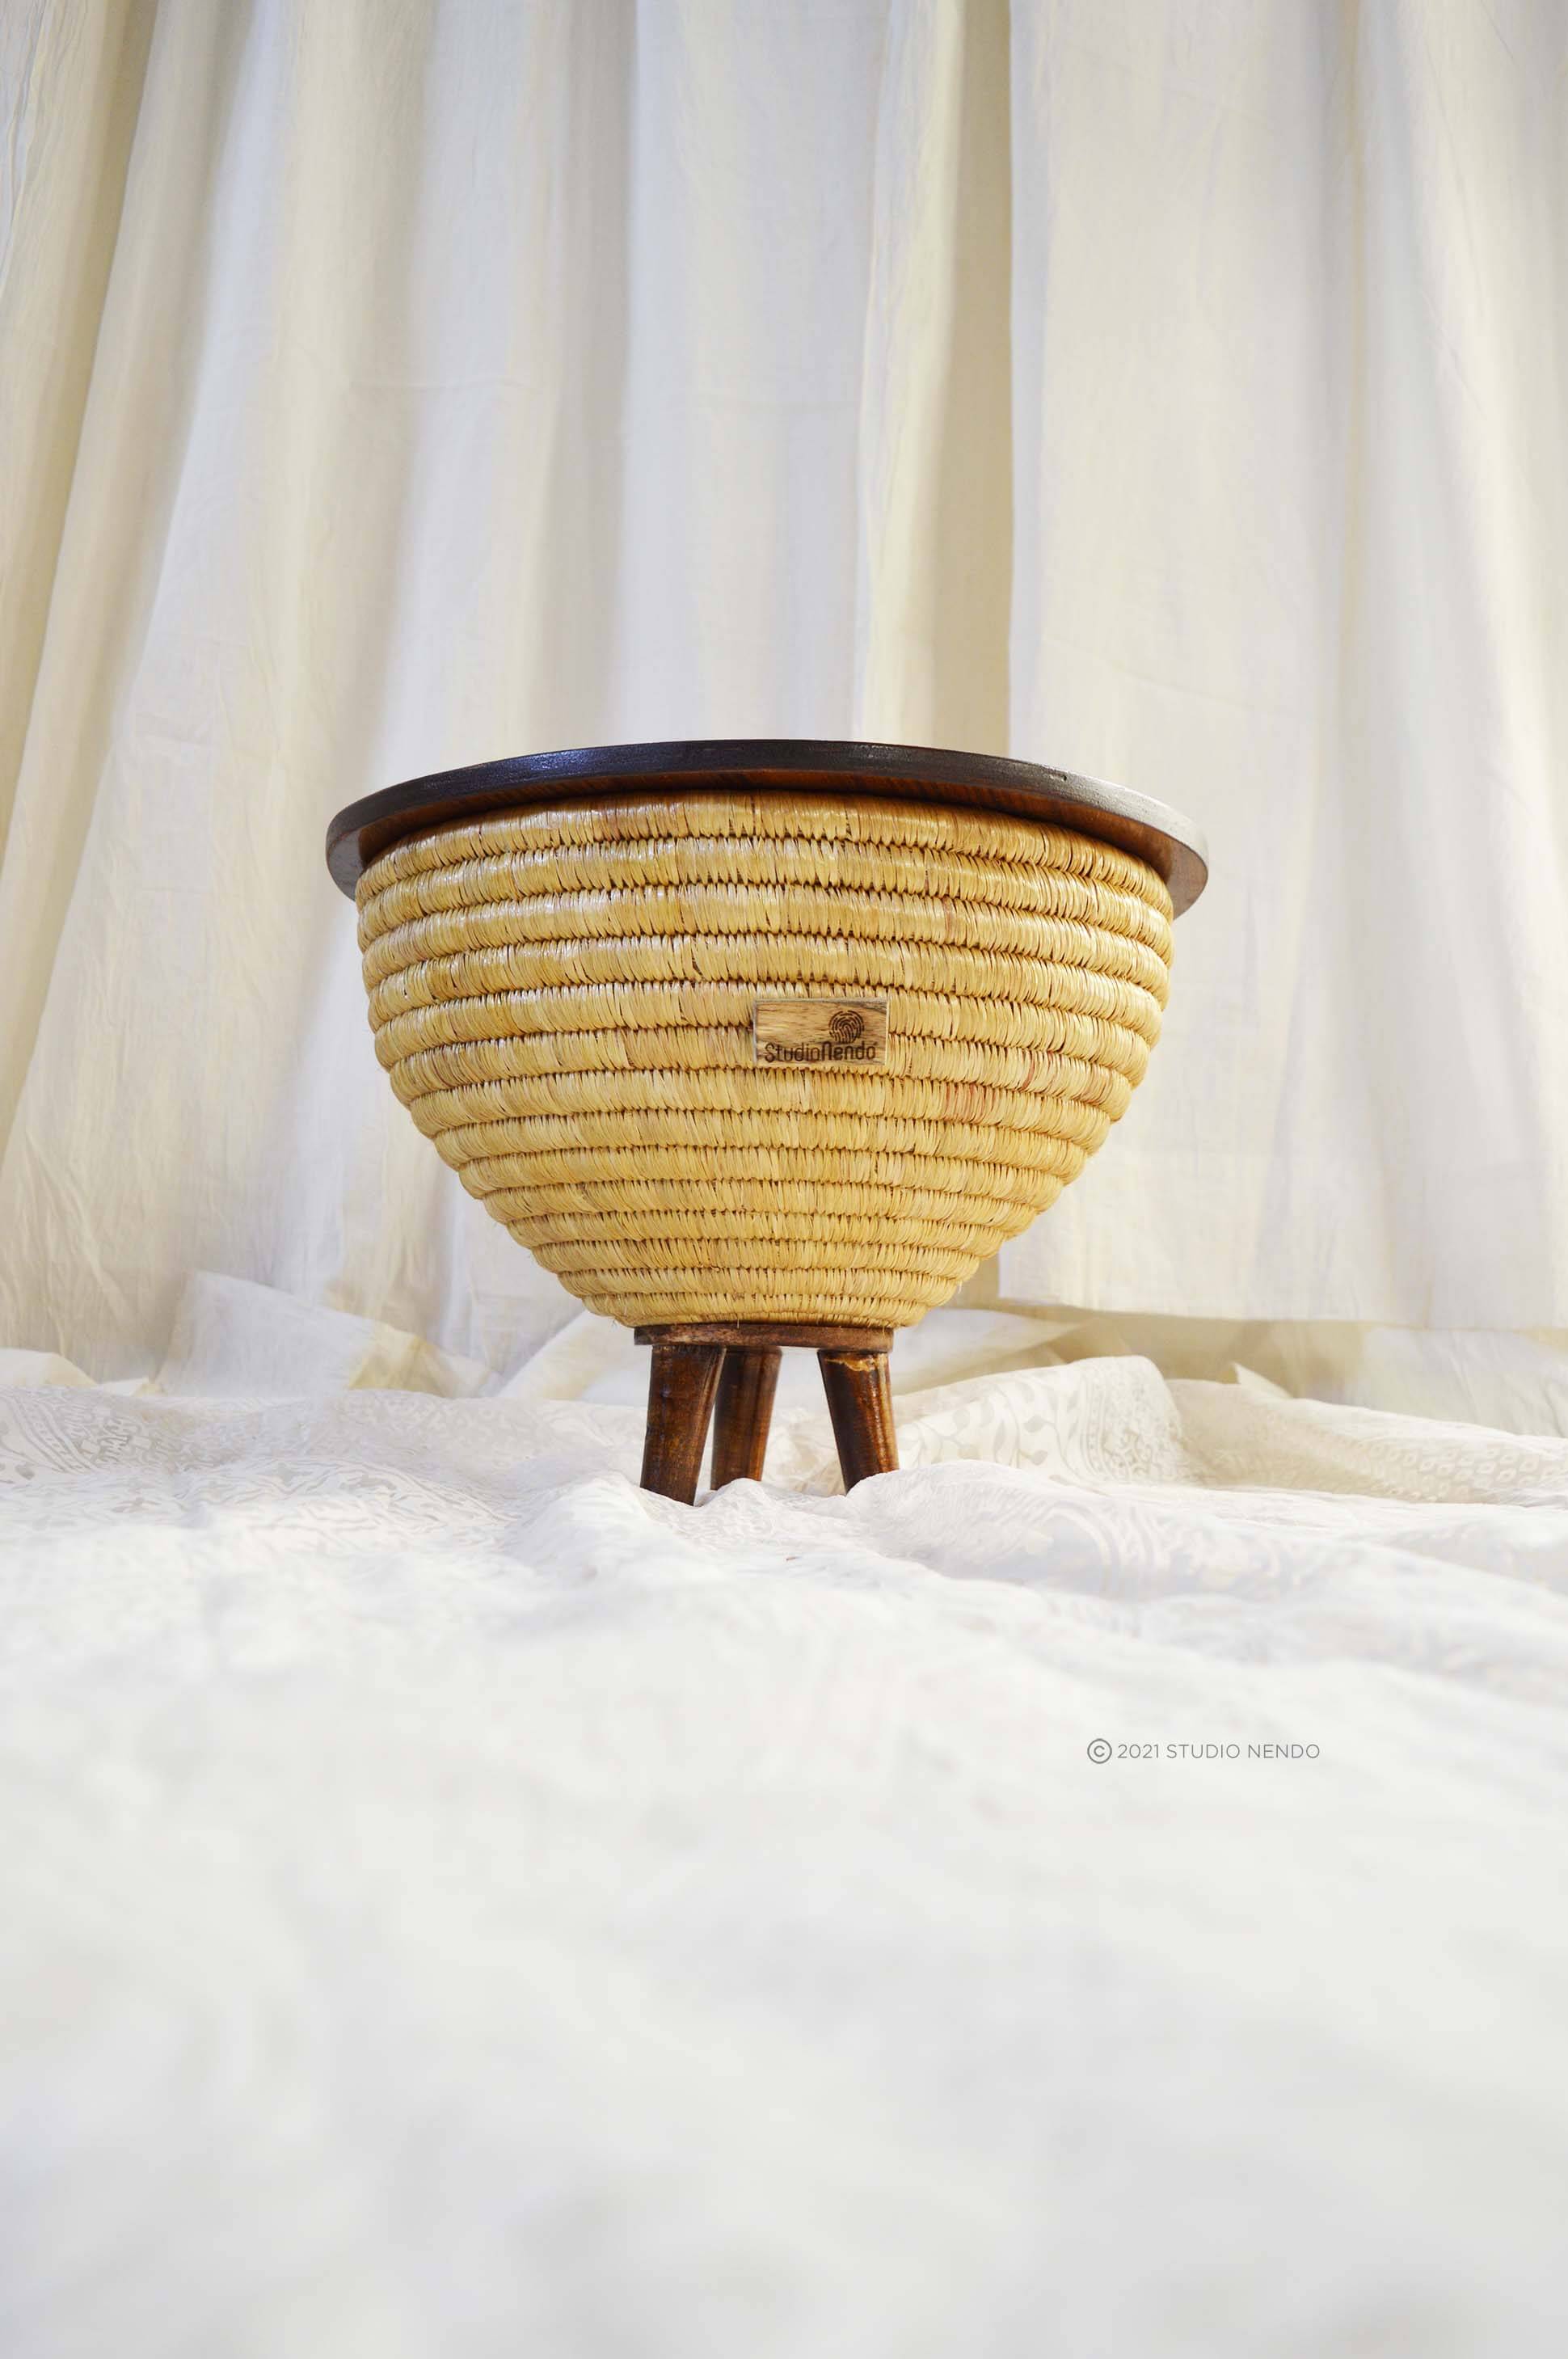 Moonj Grass Standing Storage Basket/Side Table- Round Bowl